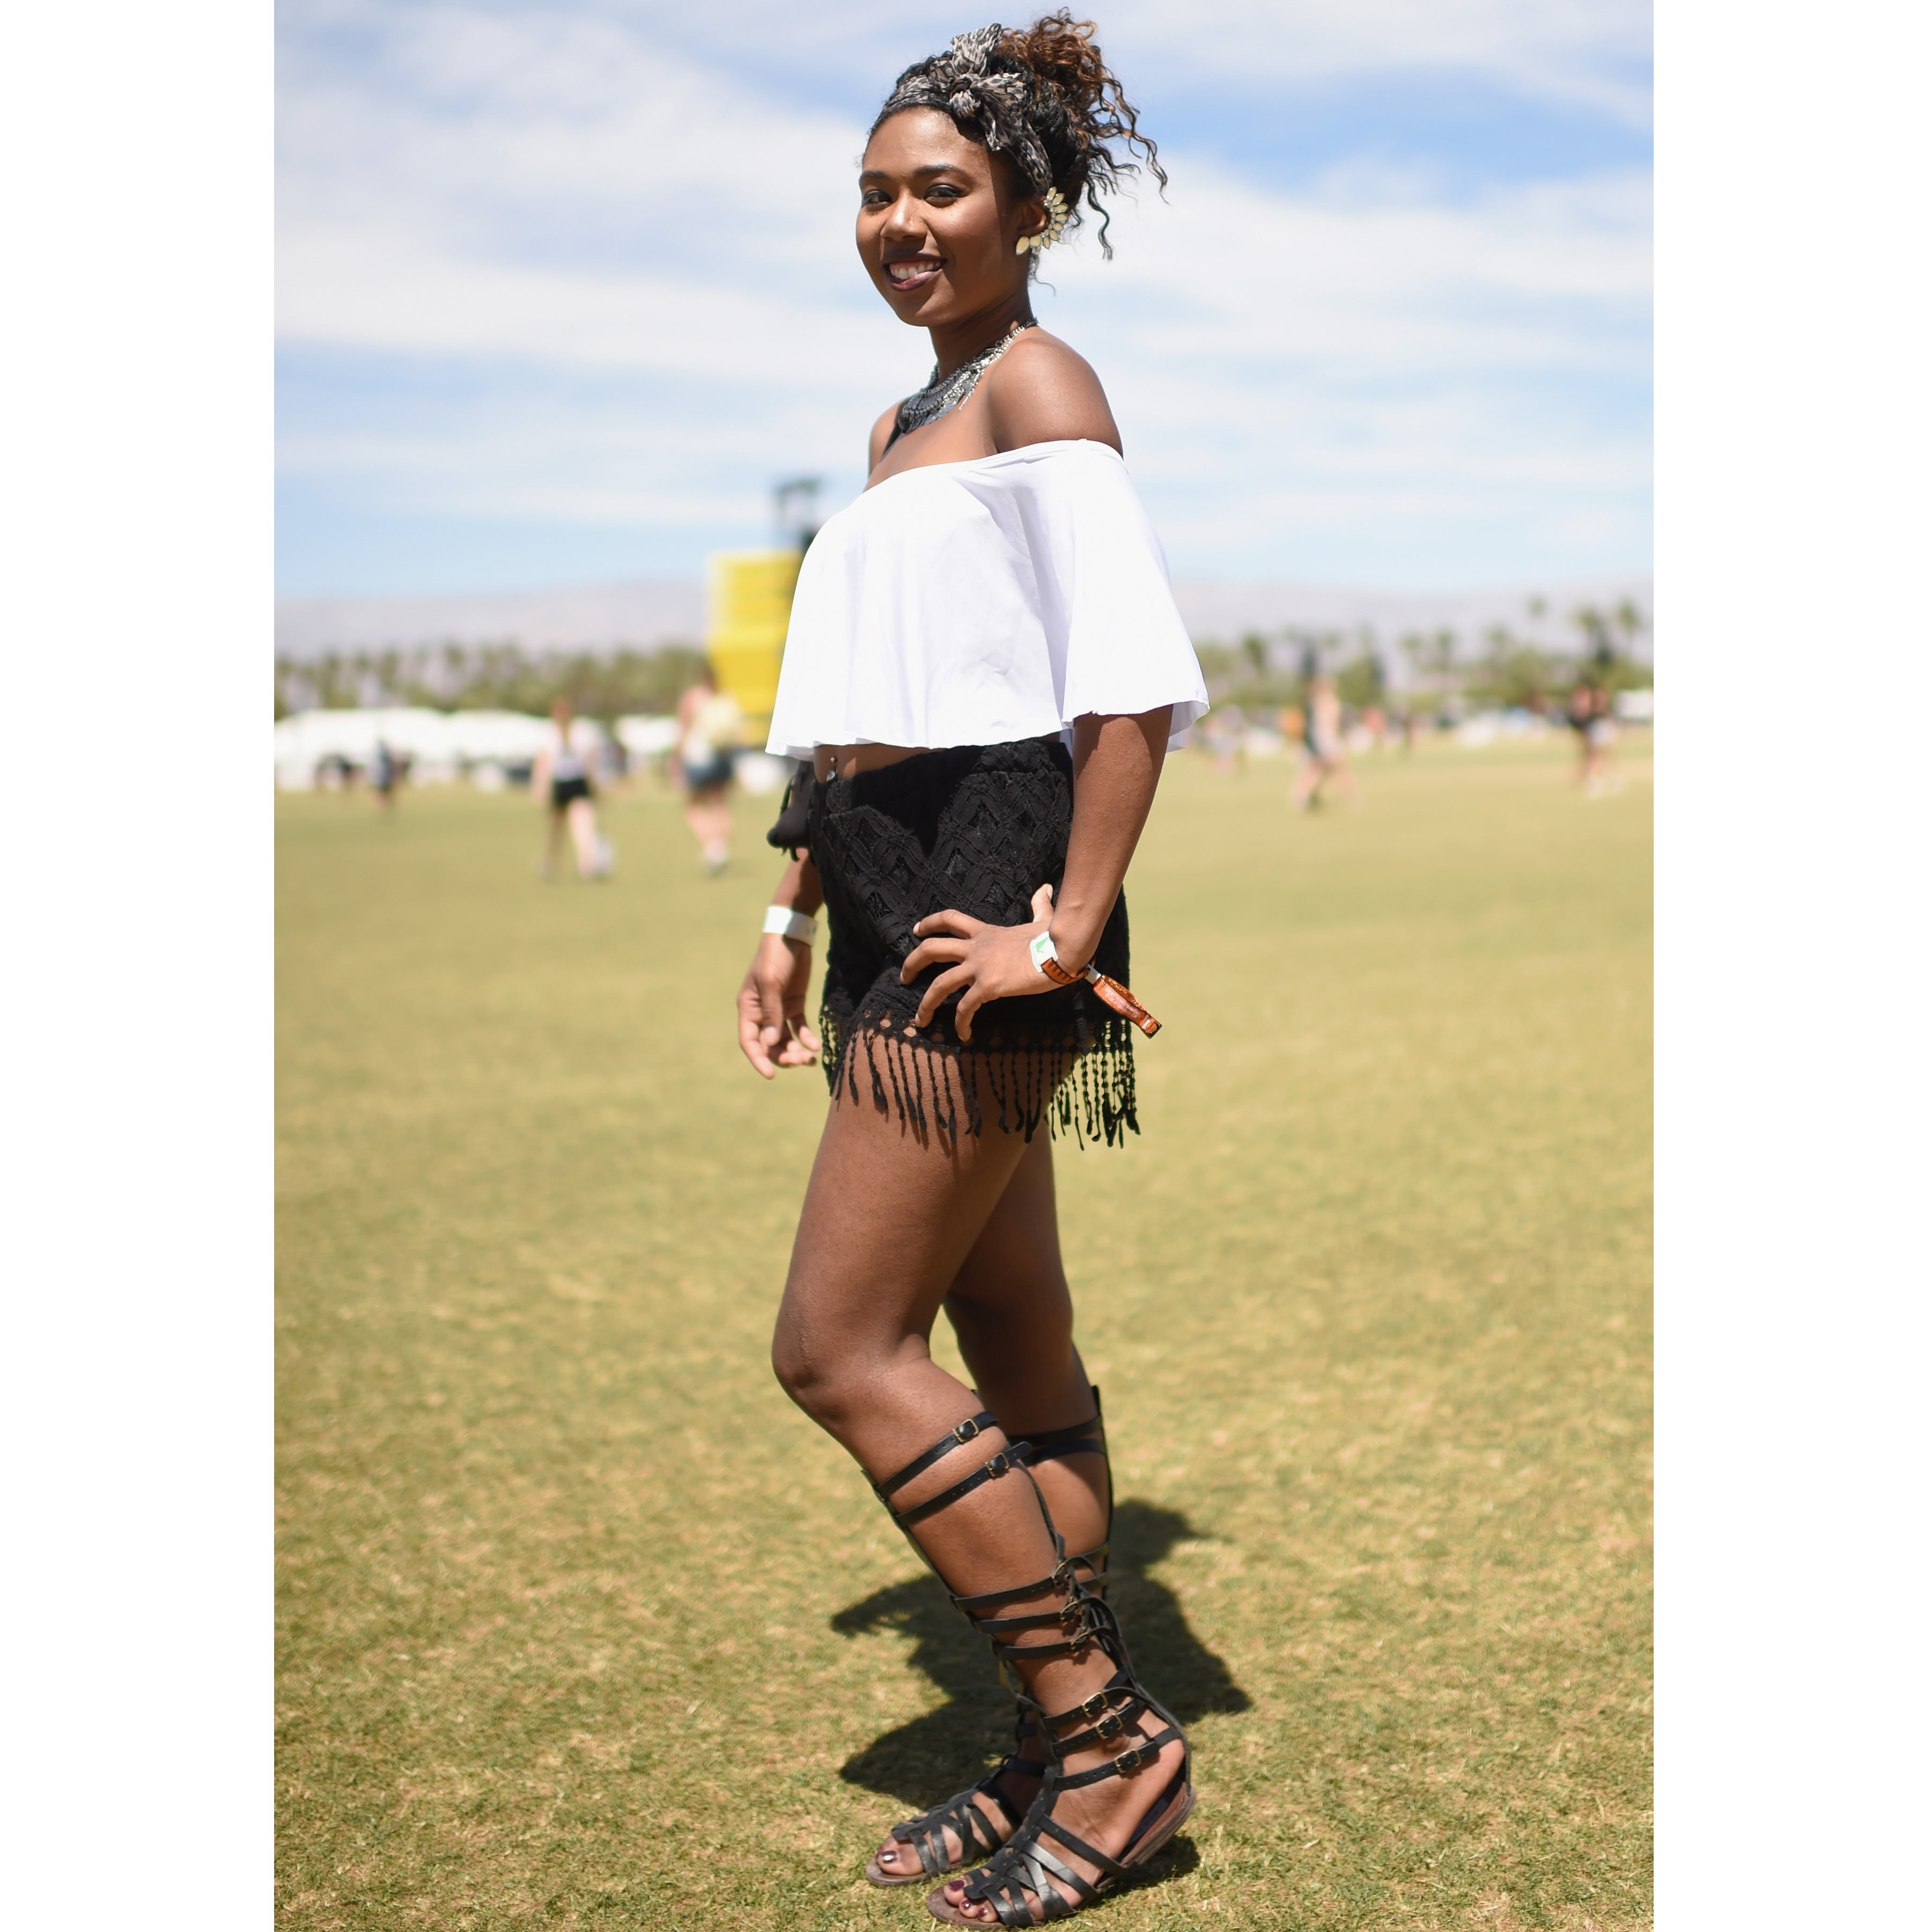 Behold, The Most Beautiful Black Women at Coachella 2016
